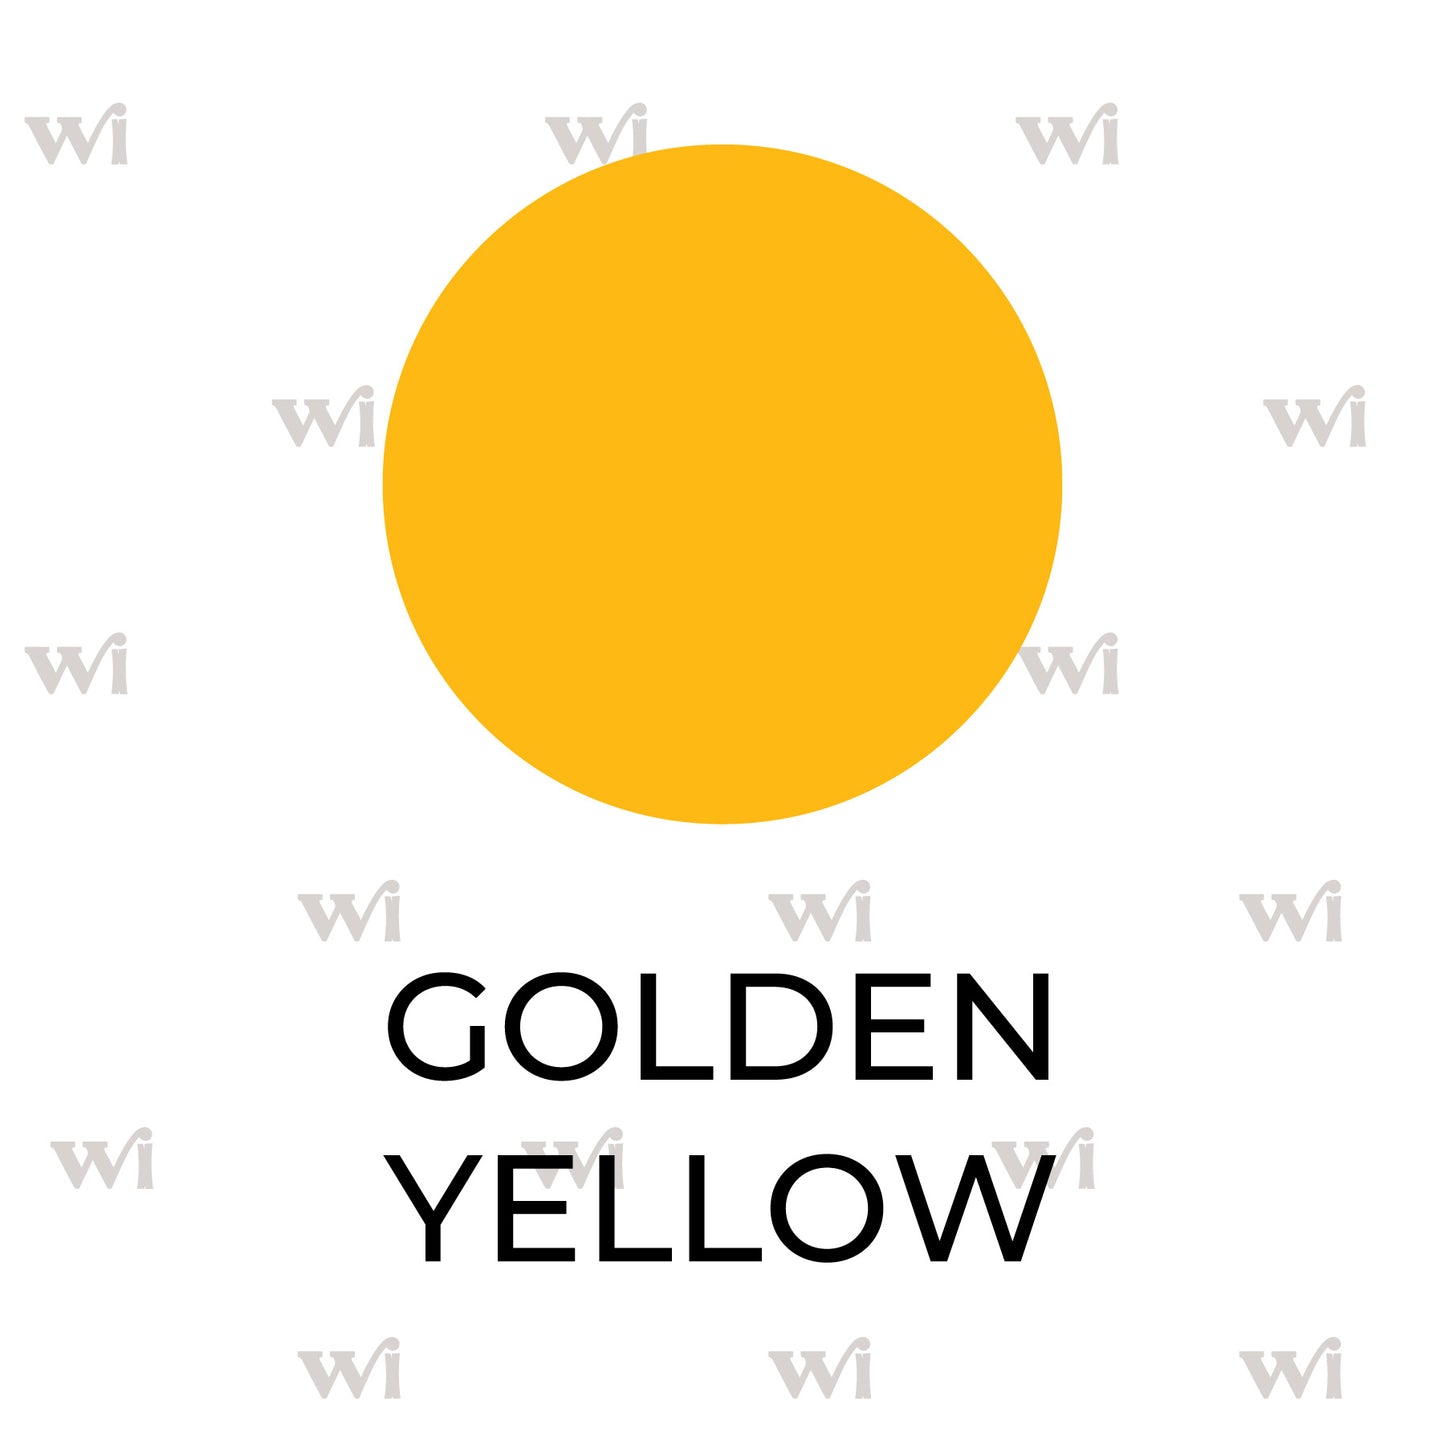 Fevicryl Acrylic Colours Golden Yellow 09